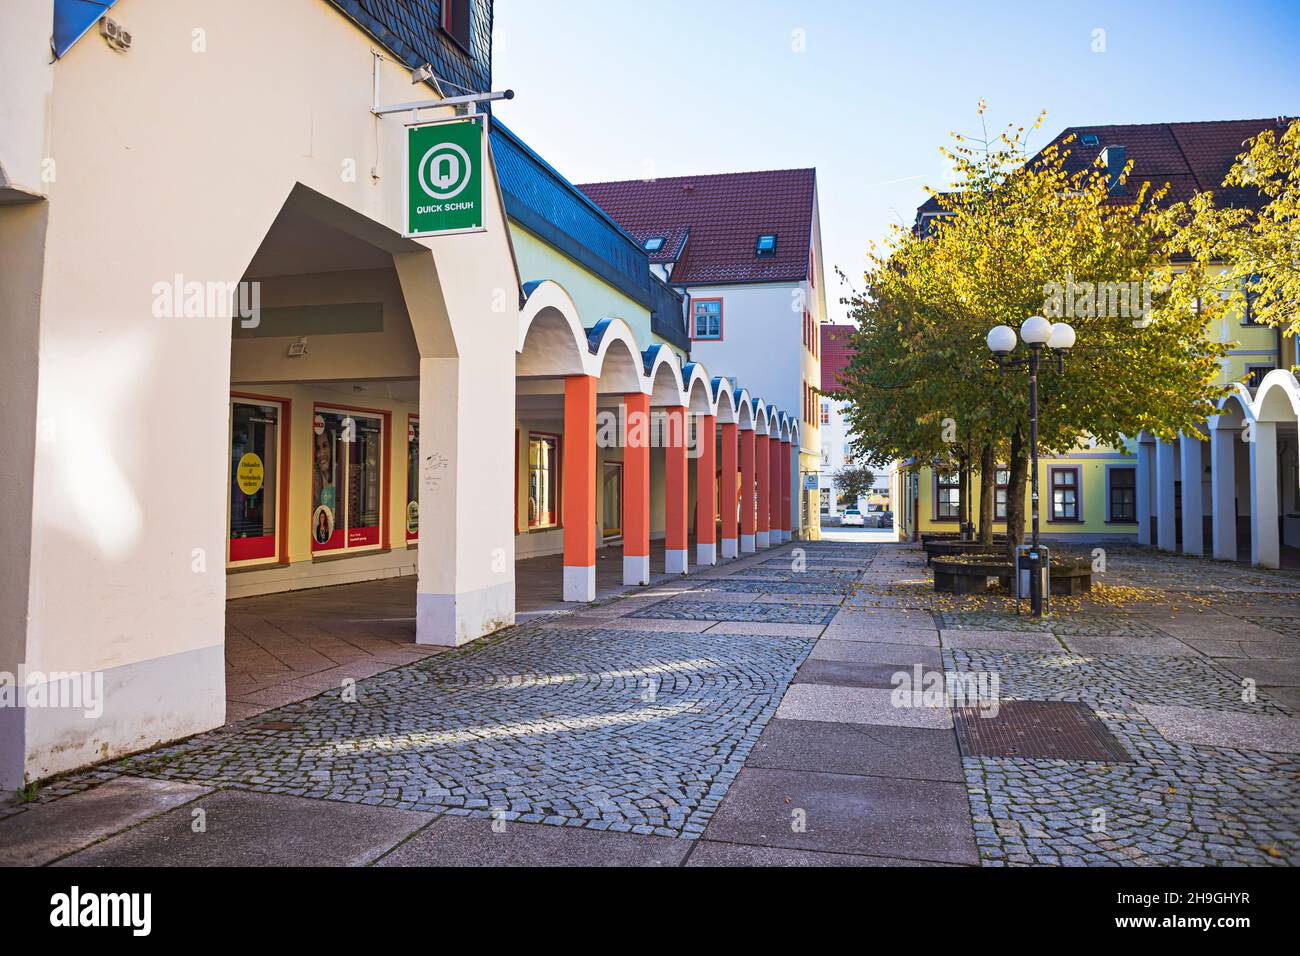 HILDBURGHAUSEN, DEUTSCHLAND - CIRCA OKTOBER 2021: Das Stadtbild von Hildburghausen, Thüringen, Deutschland. Stockfoto